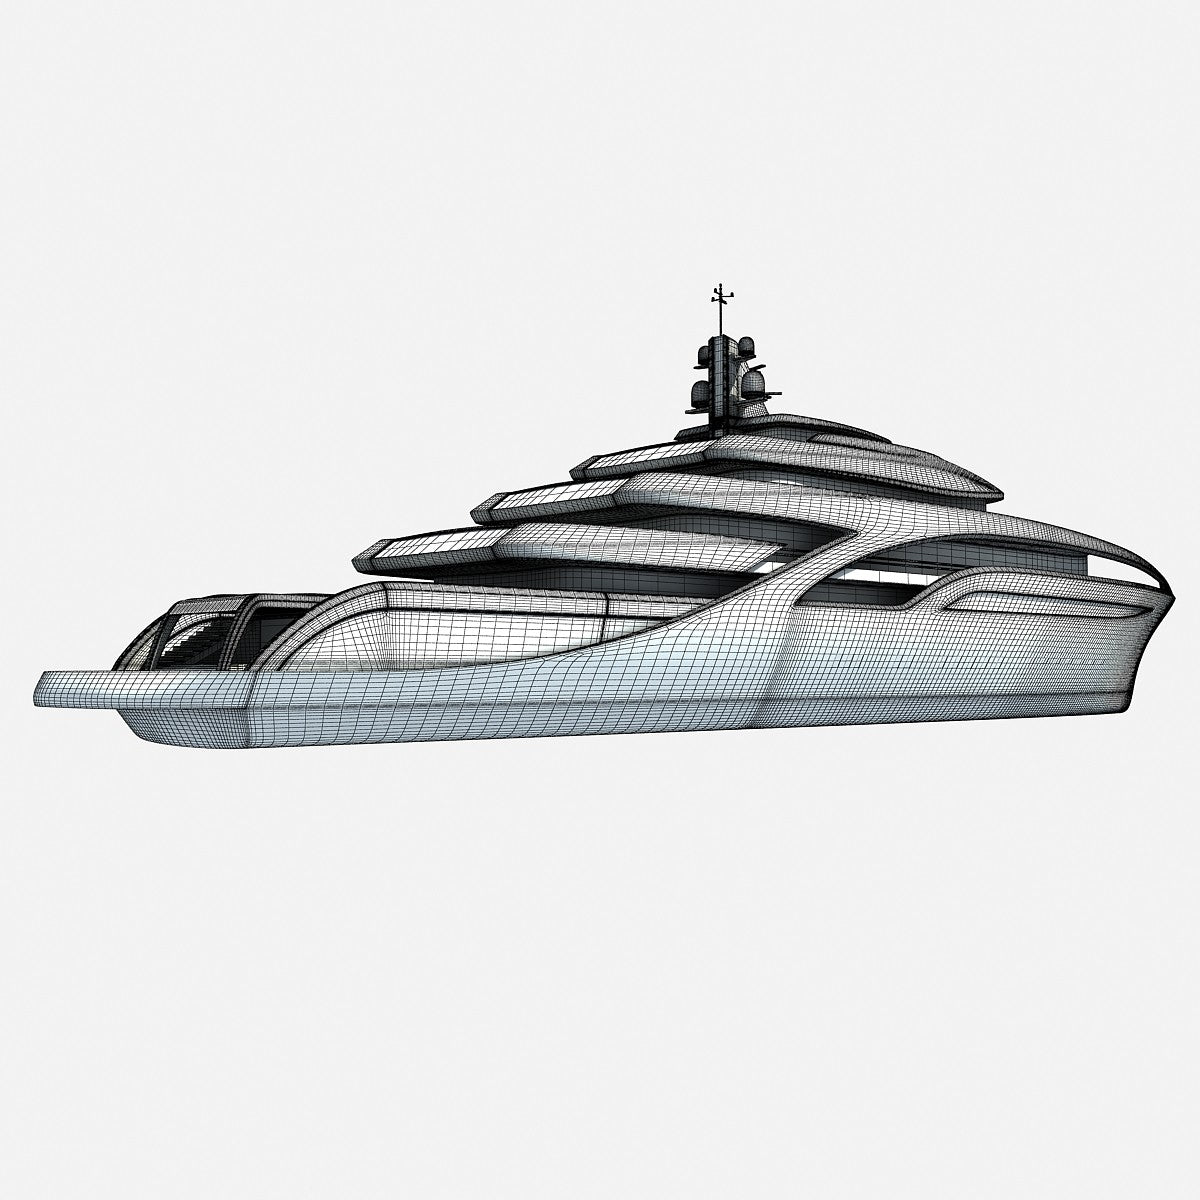 Izurus Yacht Concept Sketches and Inspiration - Car Body Design